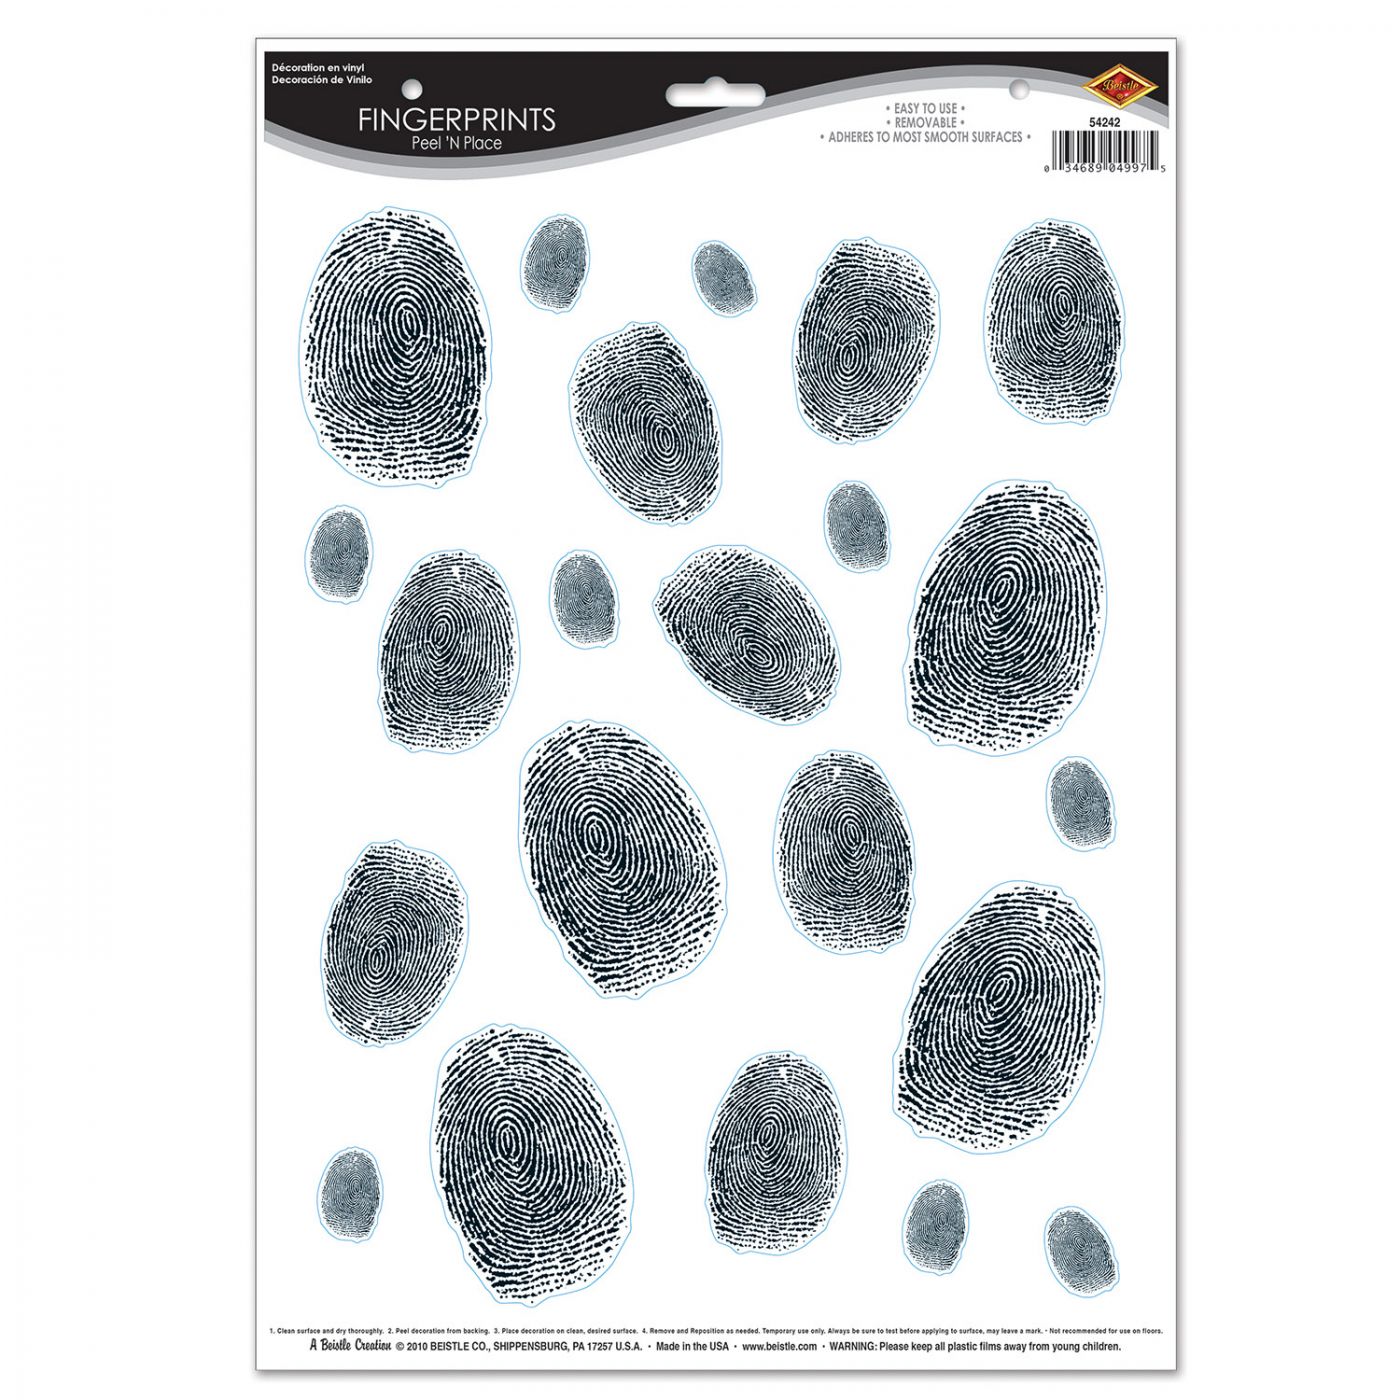 Fingerprints Peel 'N Place image